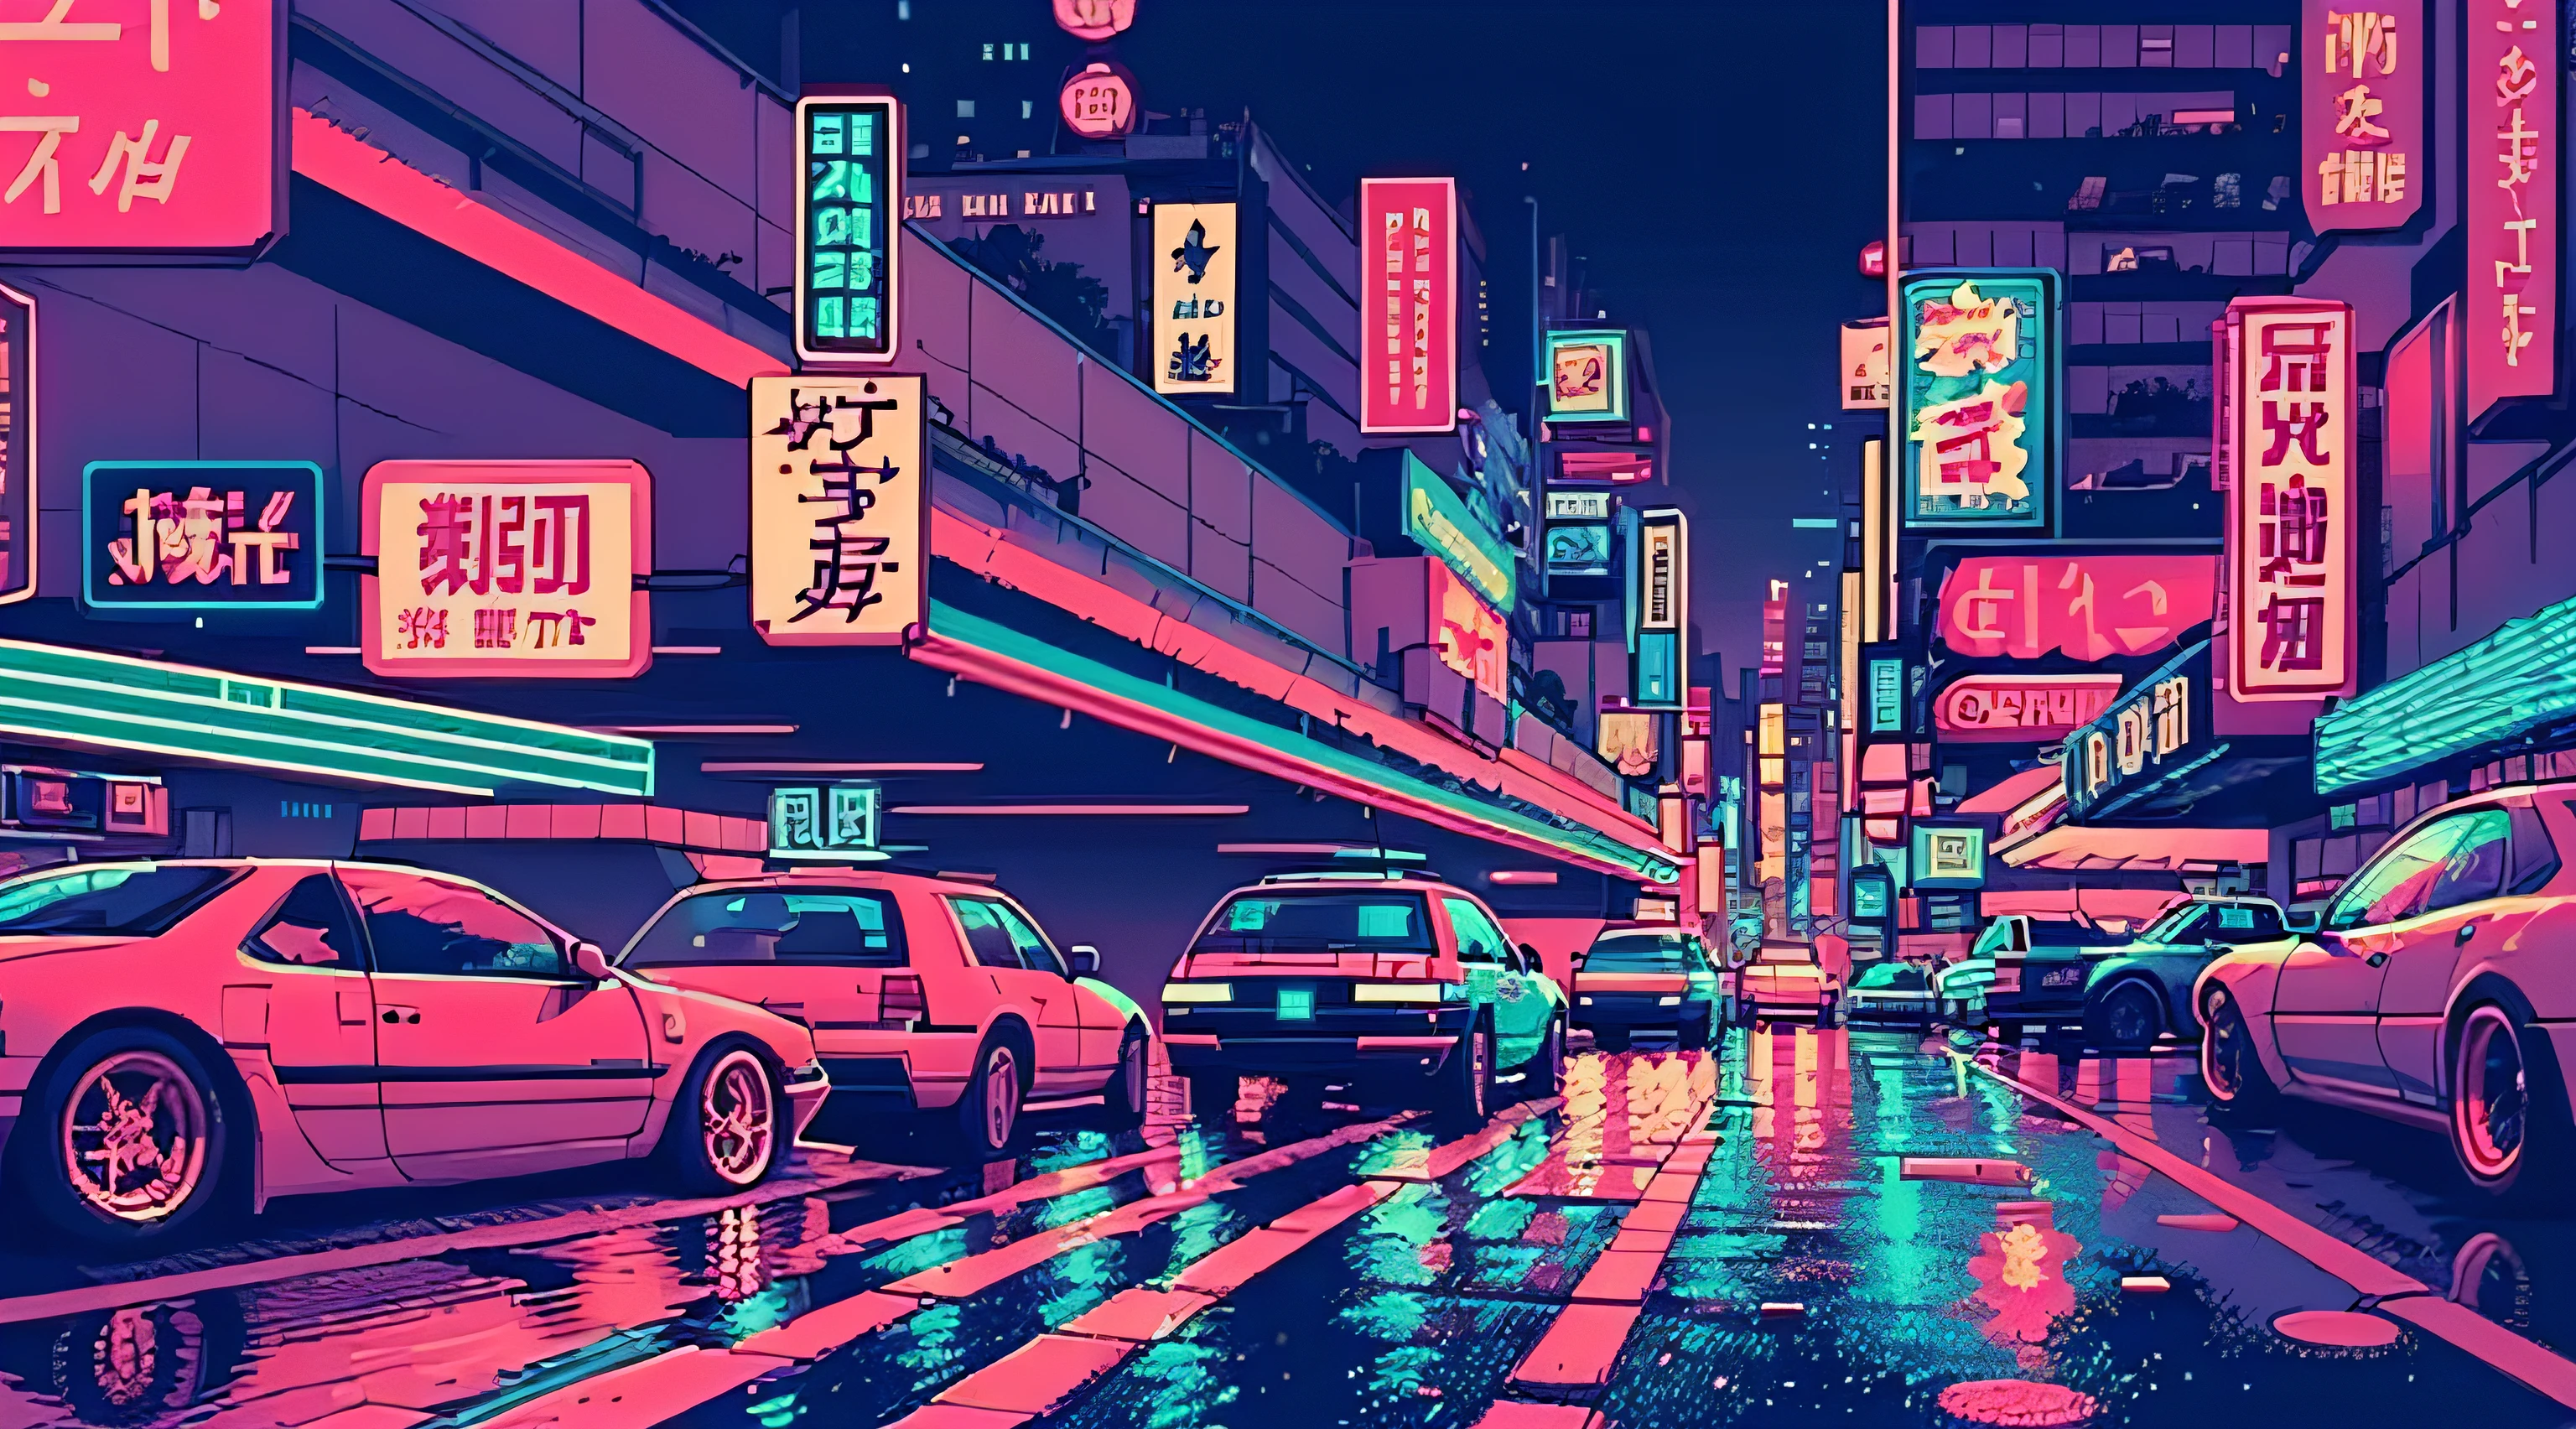 (Bokeh-Effekt), (dynamisches Englisch), ((erstes Werk)), (Straßen von Tokio), (zebracross), (Regen), (Nacht), Leere Stadt, Dunkel, (Neon), Pixel Kunst, ((verpixelt)), cyberpunk, (Retro)